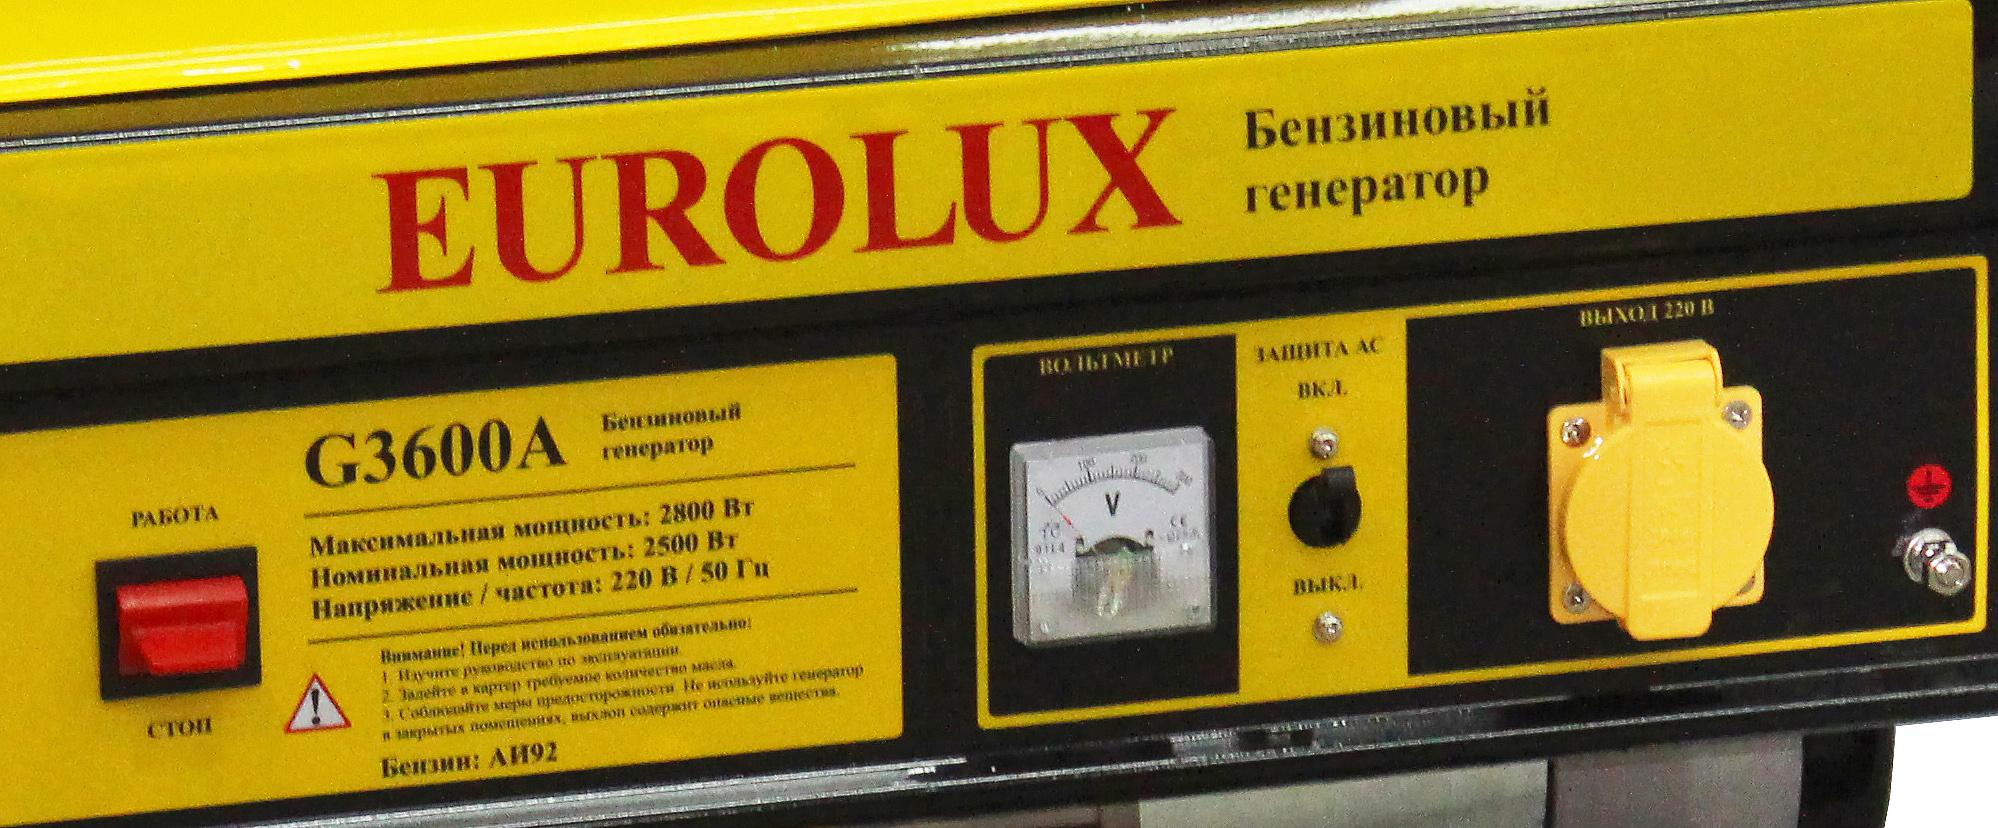 Eurolux g6500a. Электрогенератор g3600a Eurolux. Бензиновый Генератор Eurolux g2700a. Бензиновый Генератор Eurolux g4000a. Бензогенератор Eurolux g 3600a.